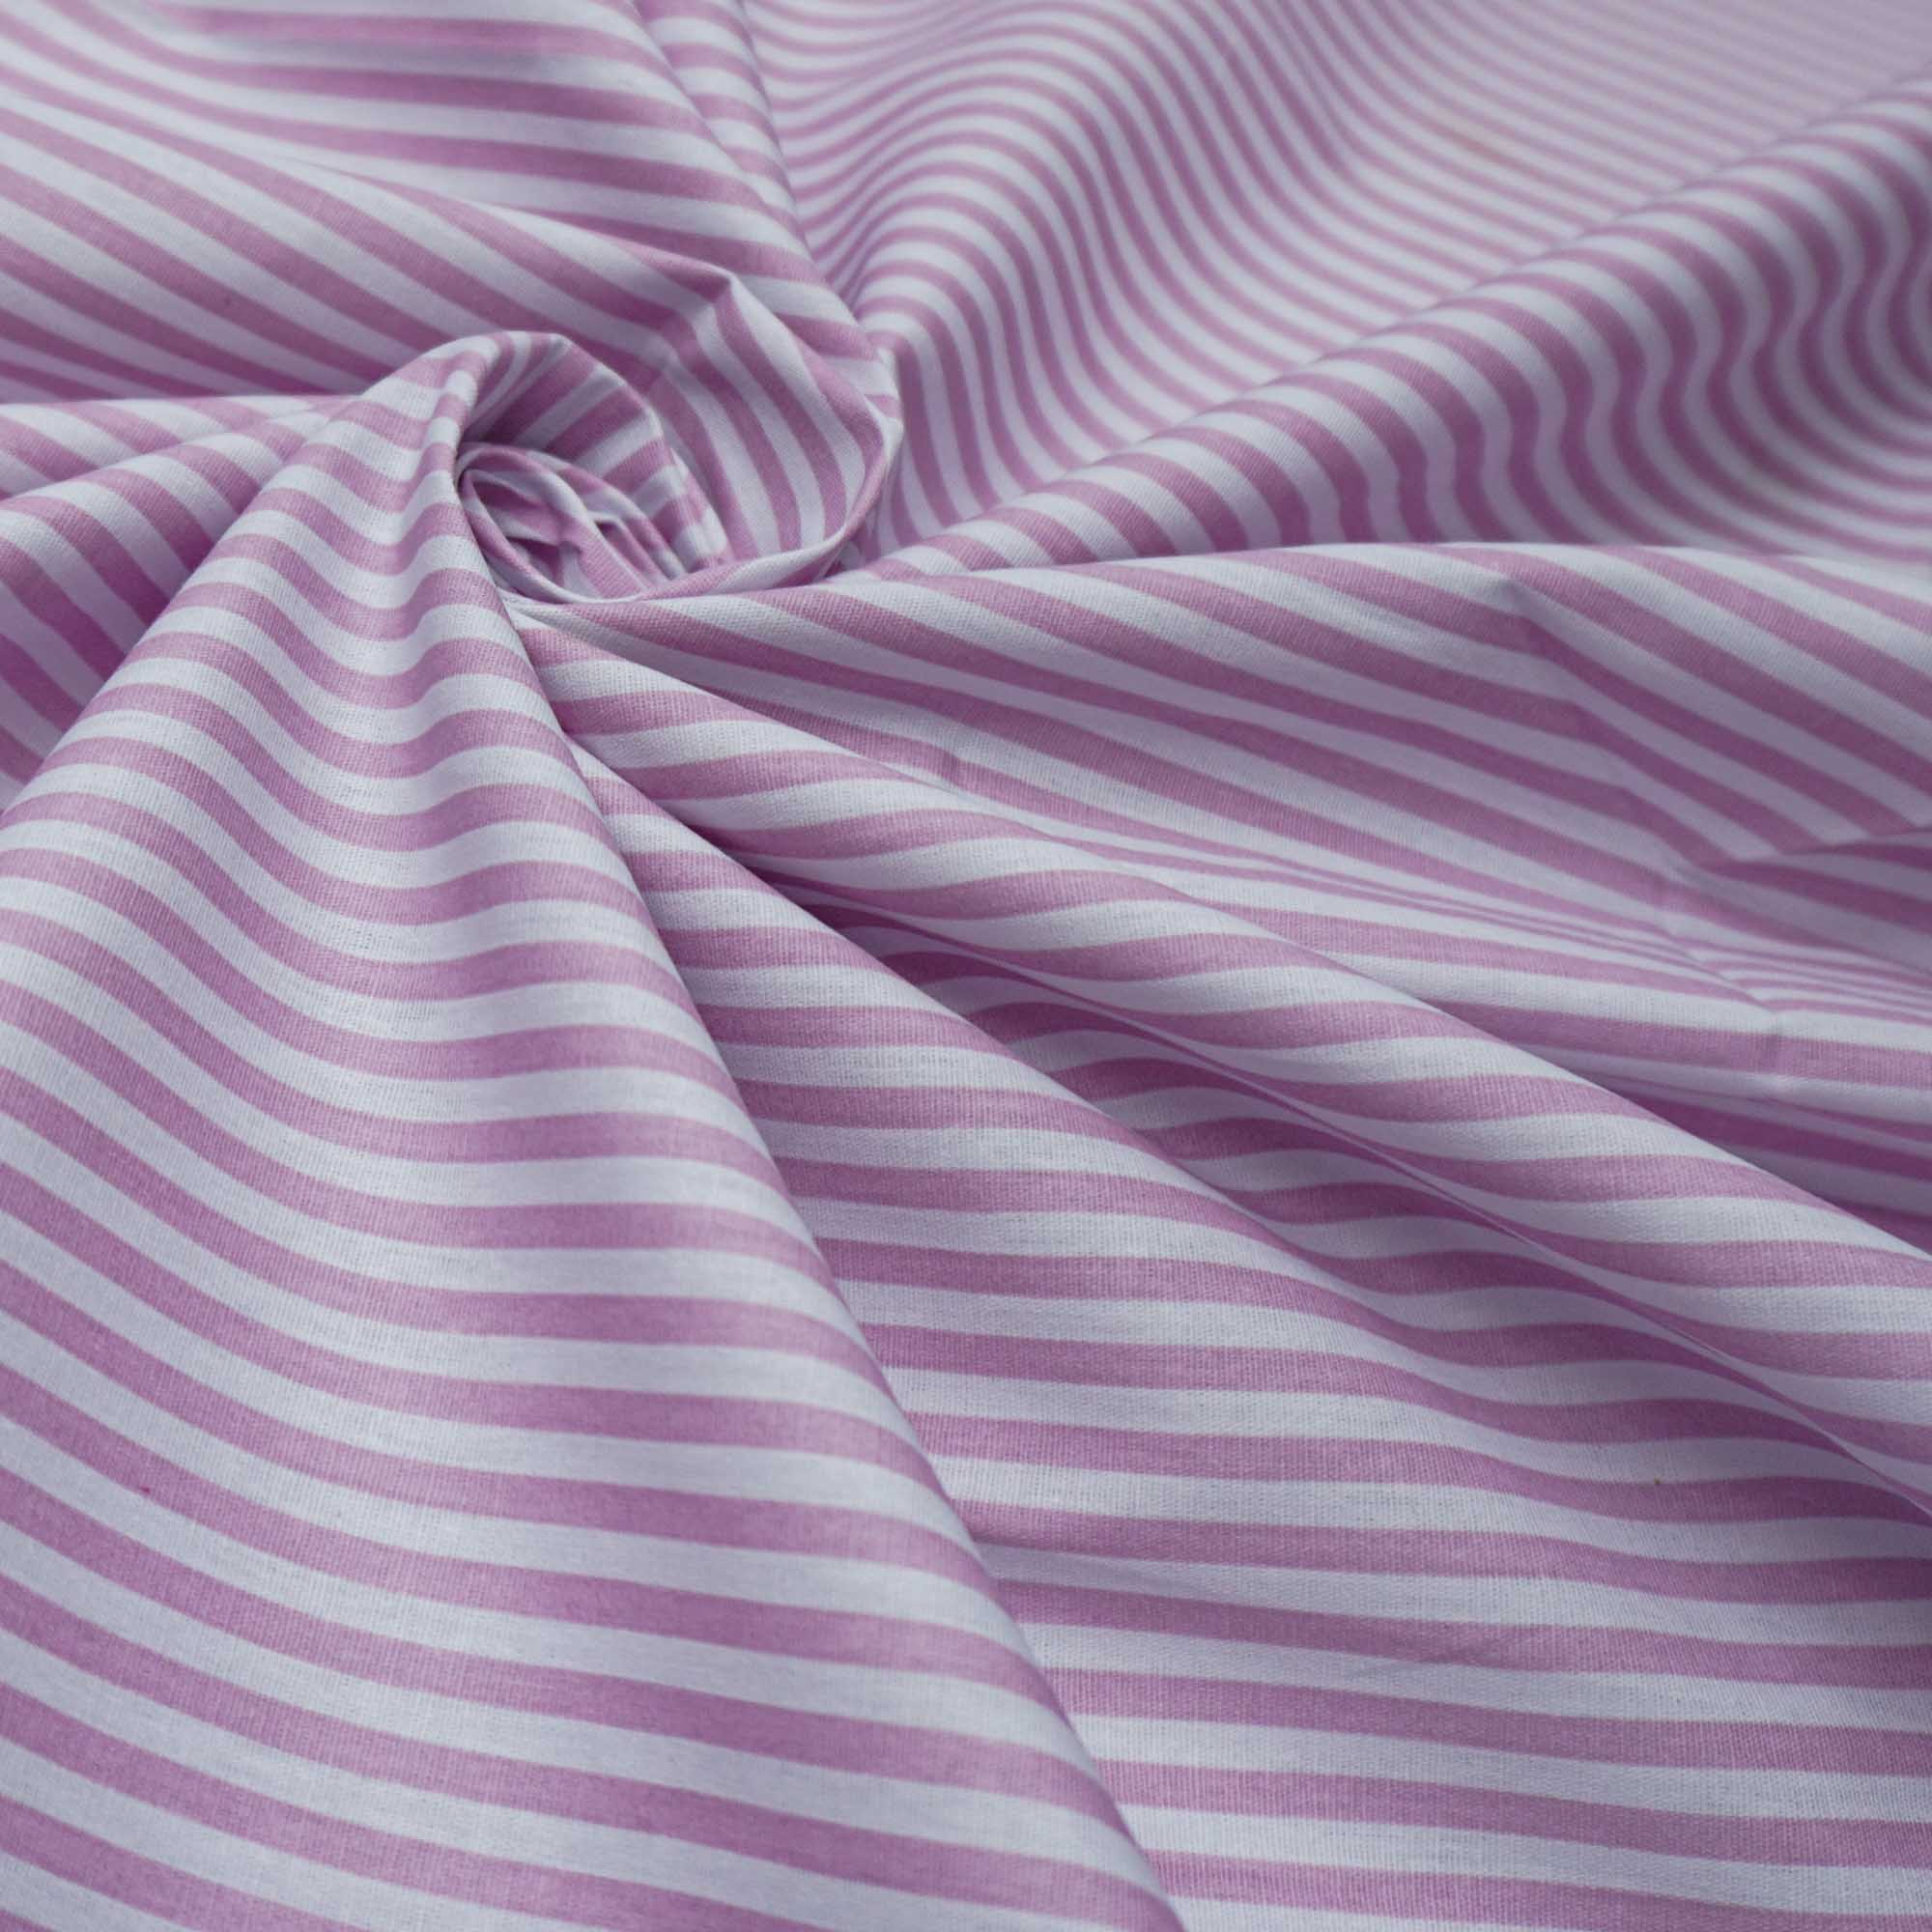 Tecido tricoline estampado listrado rosa/branco